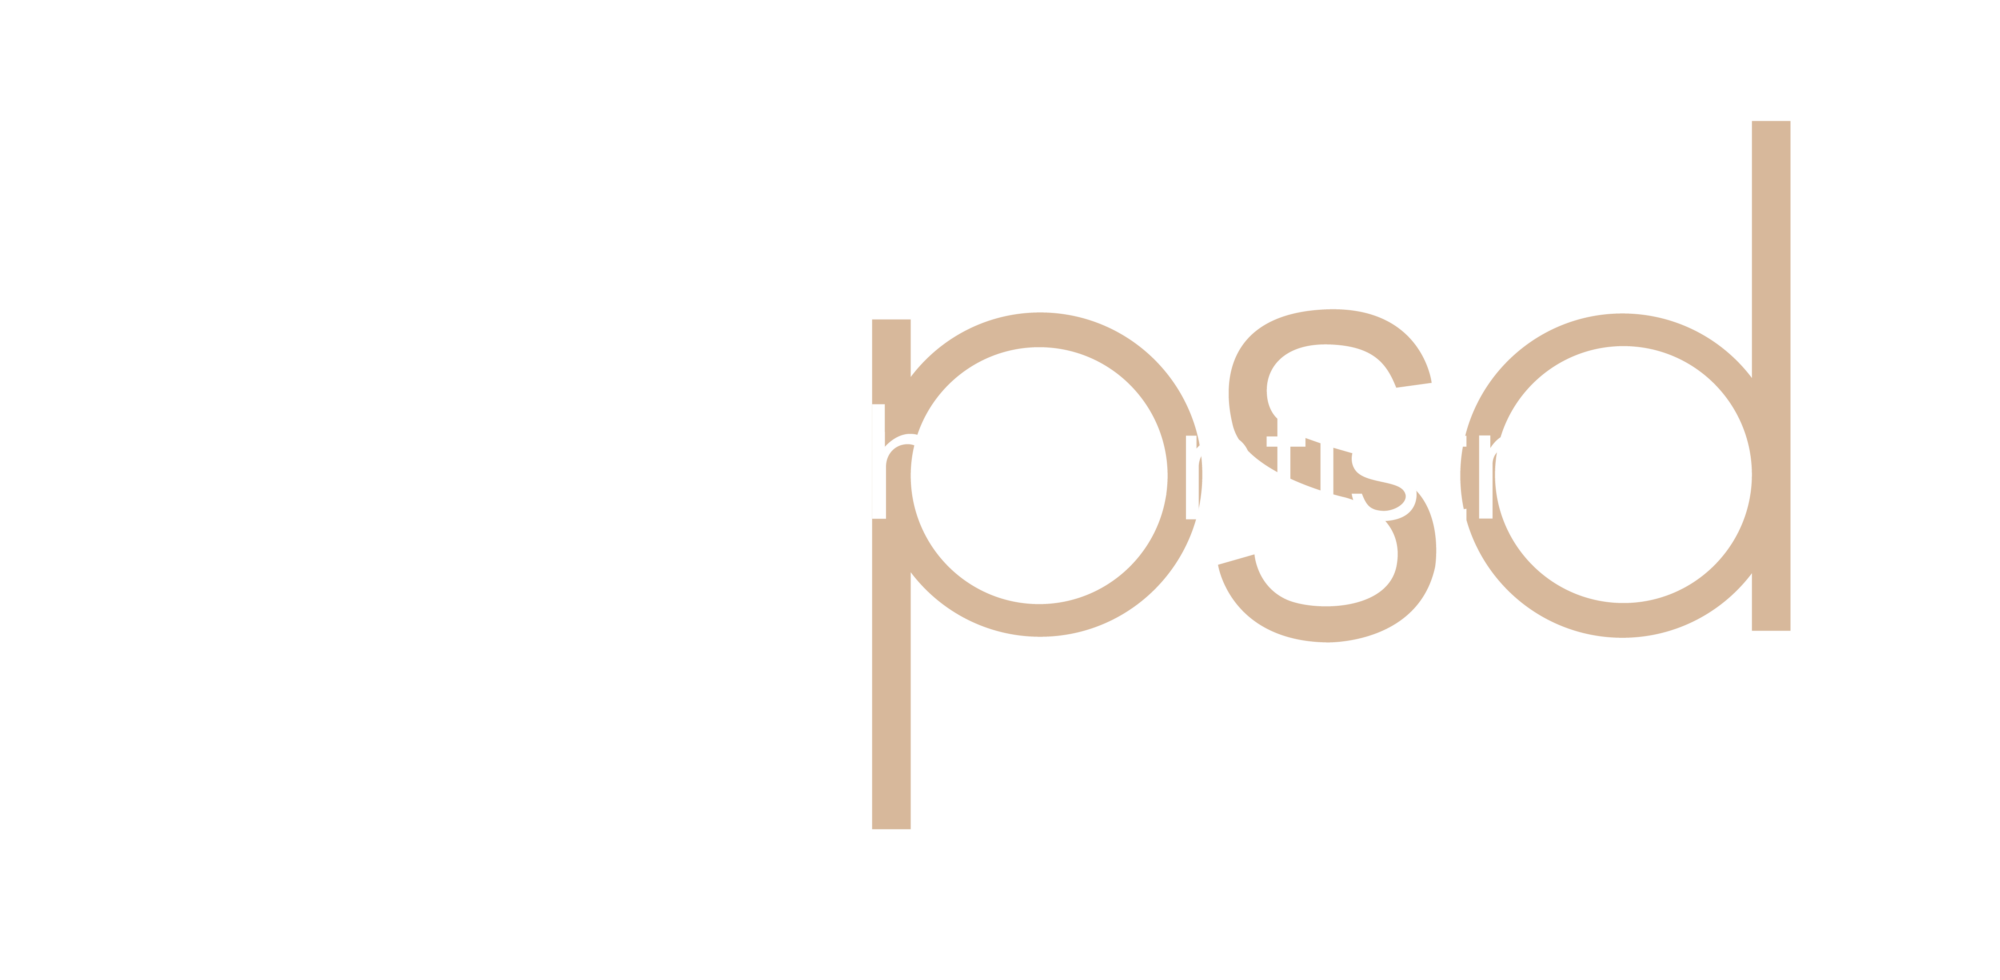 Park South Dentistry logo in white